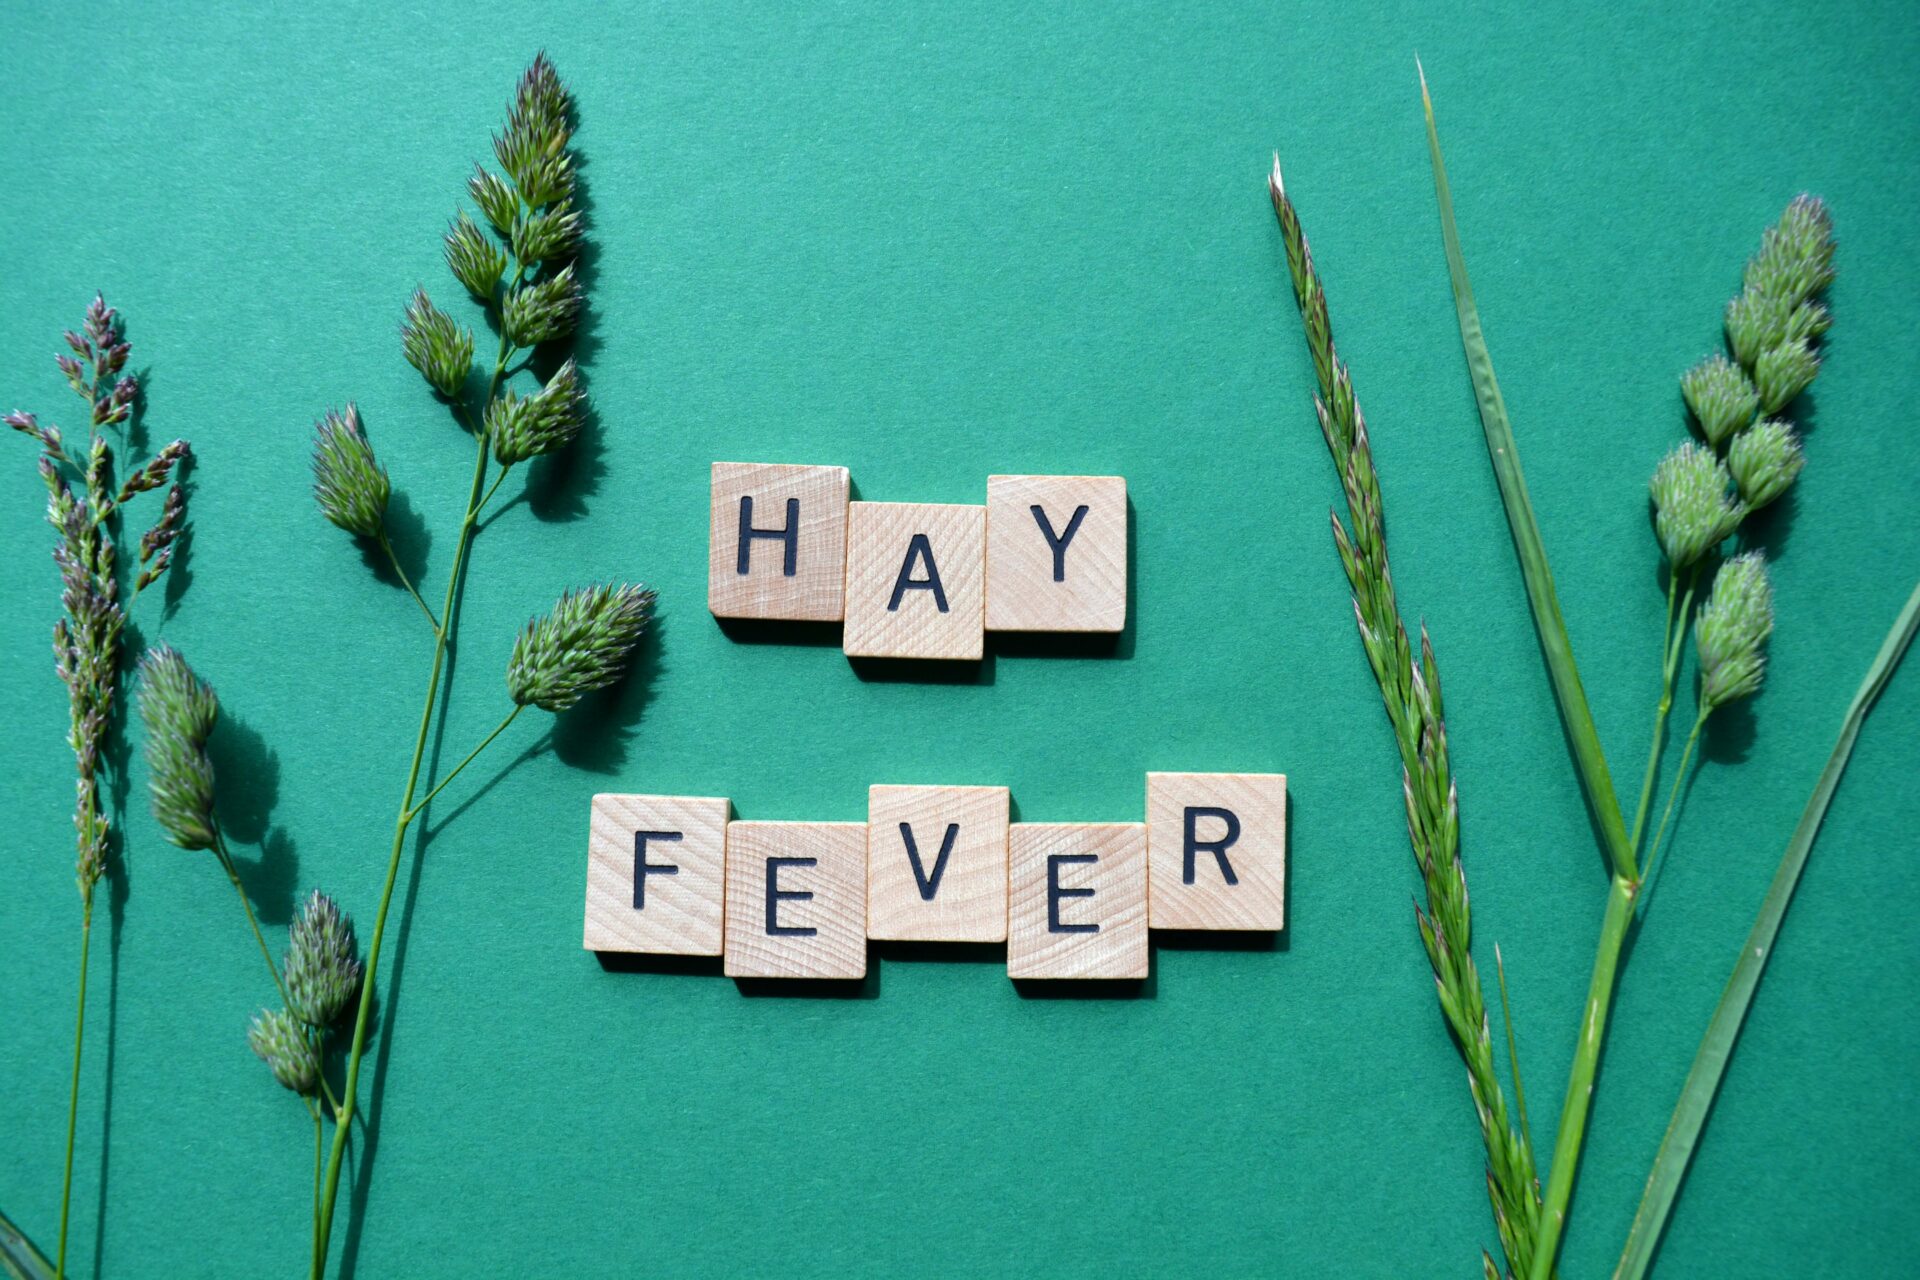 Hey Fever